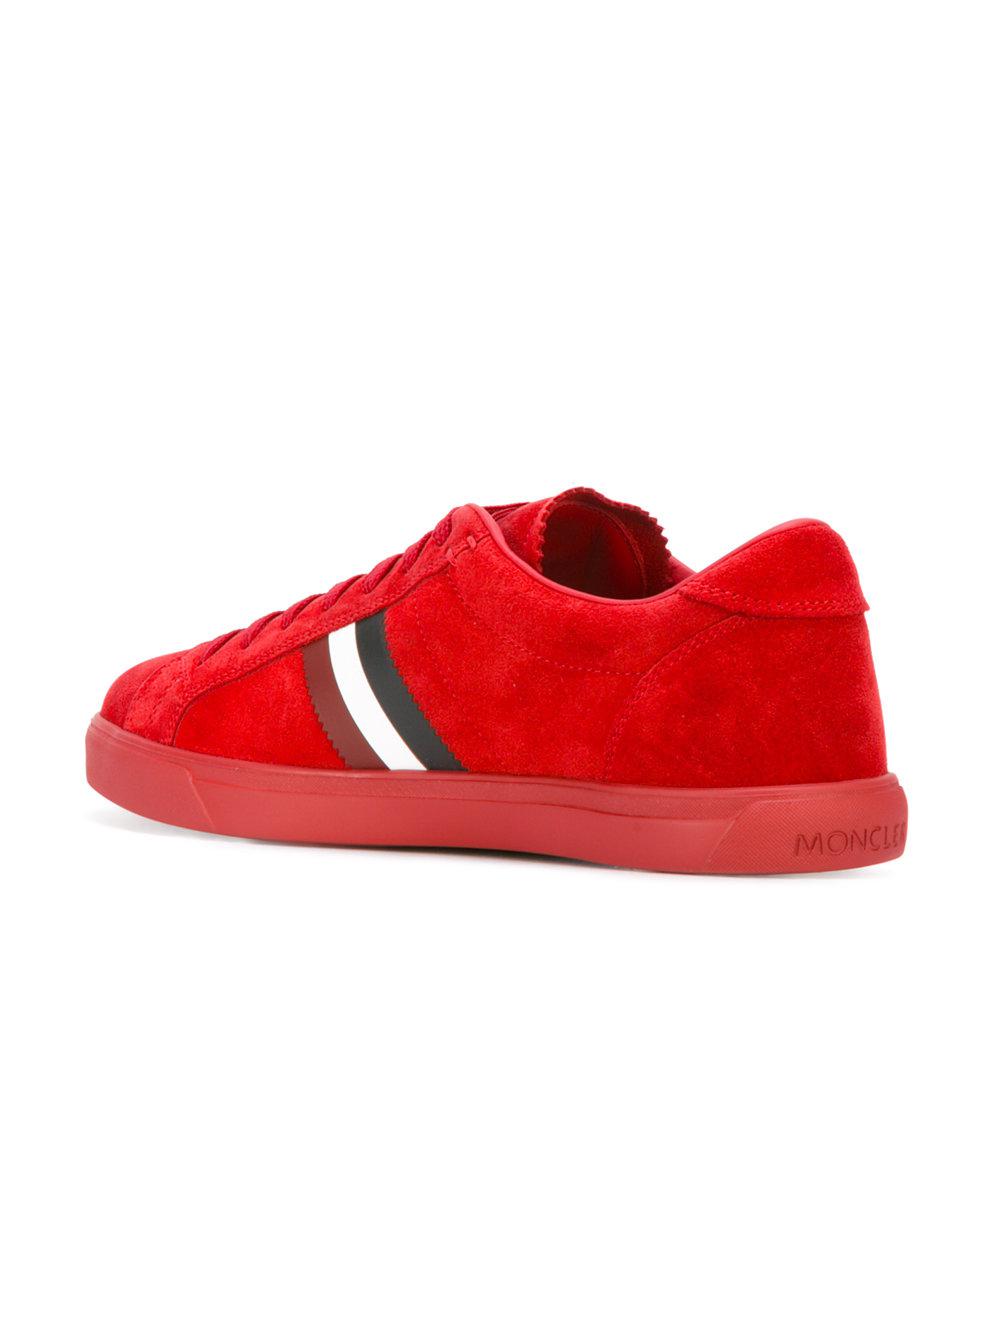 Moncler Leather La Monaco Sneakers in Red for Men | Lyst